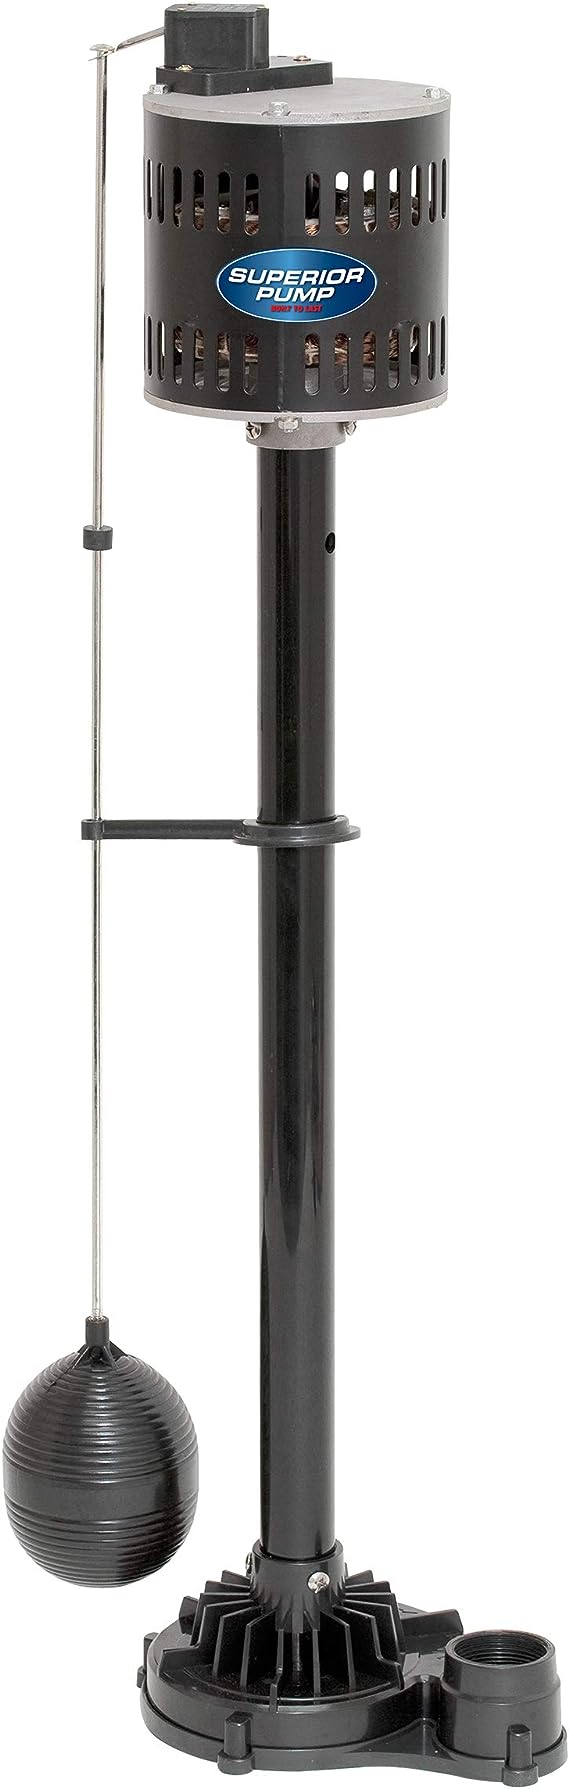 Superior Pump 92553 1/2 HP Thermoplastic Pedestal Pump, Black